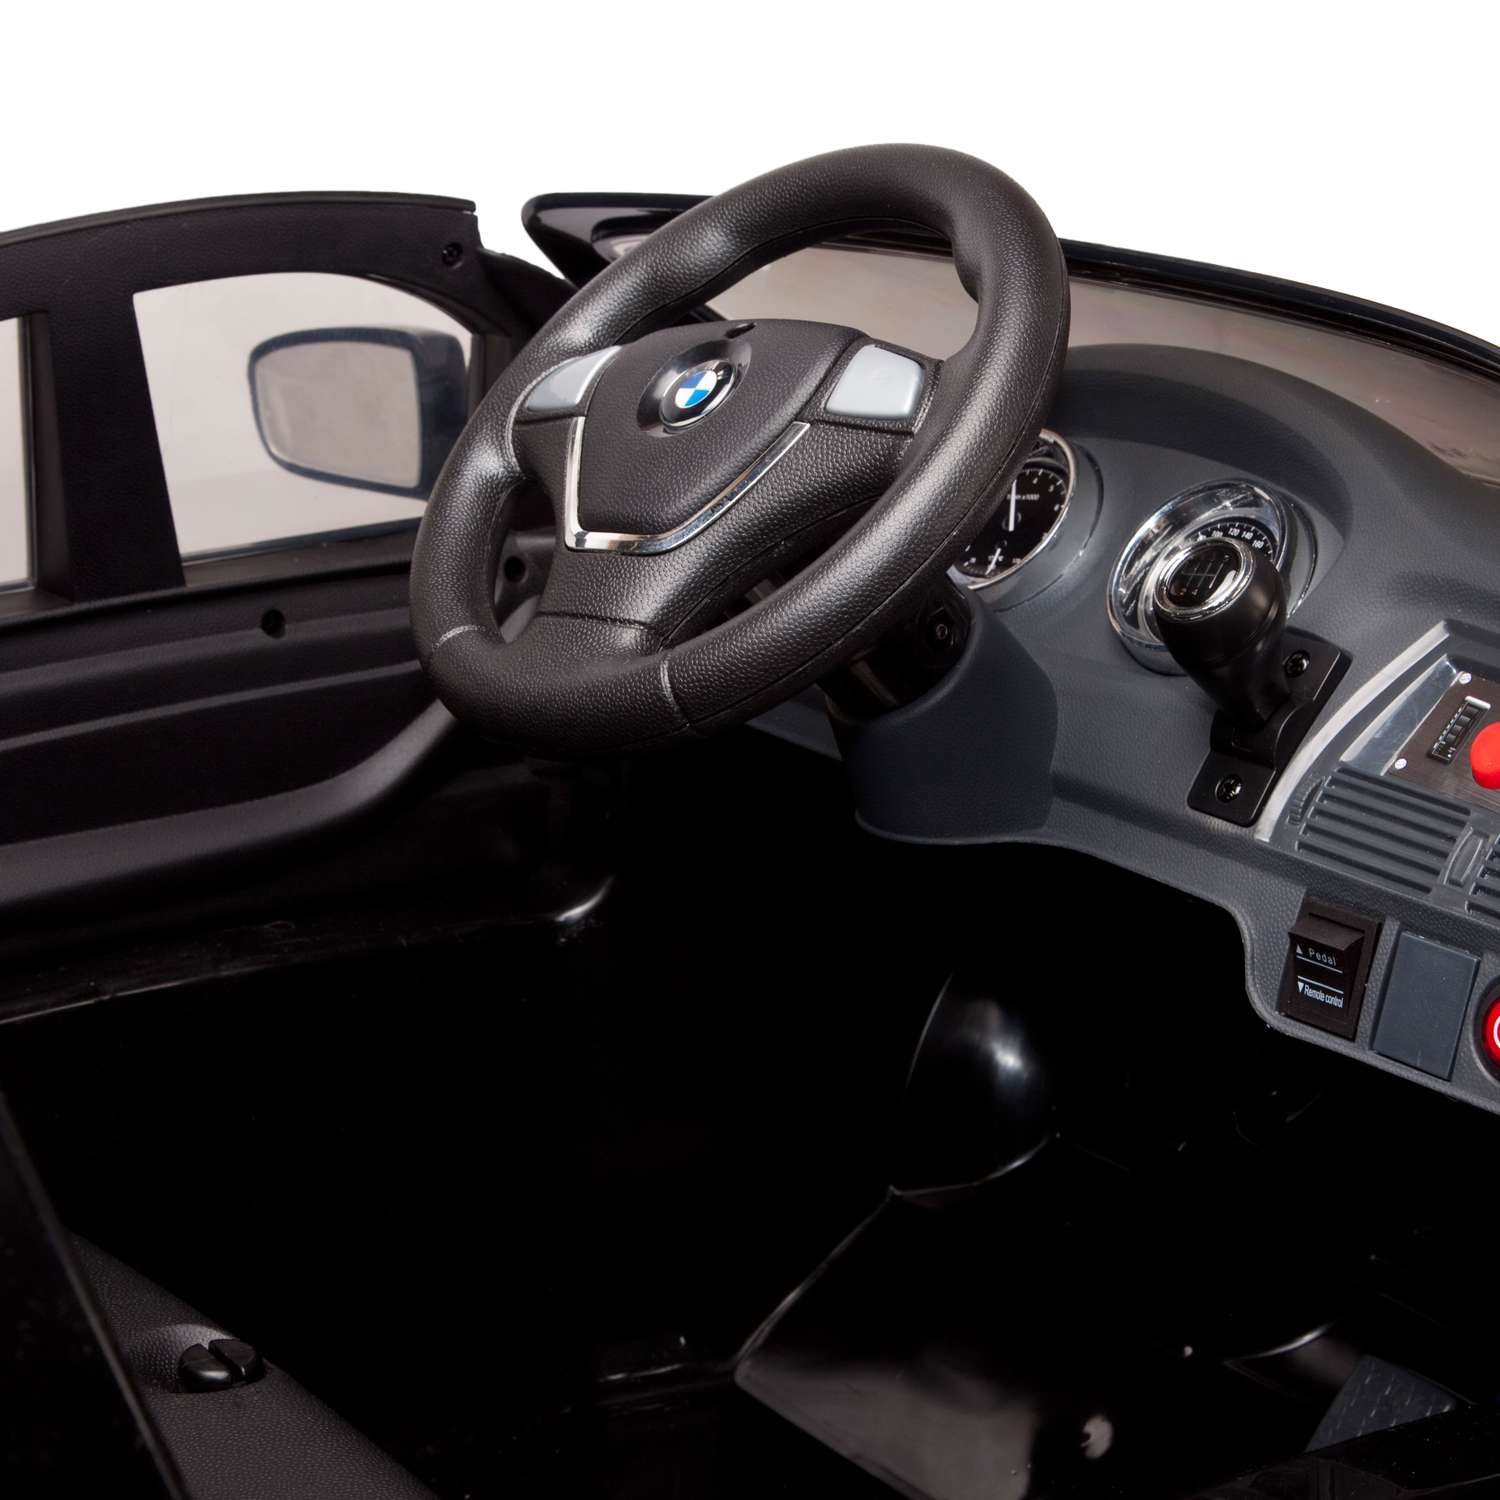 Электромобиль Kreiss BMW X6 6V черный (свет/звук) - фото 9